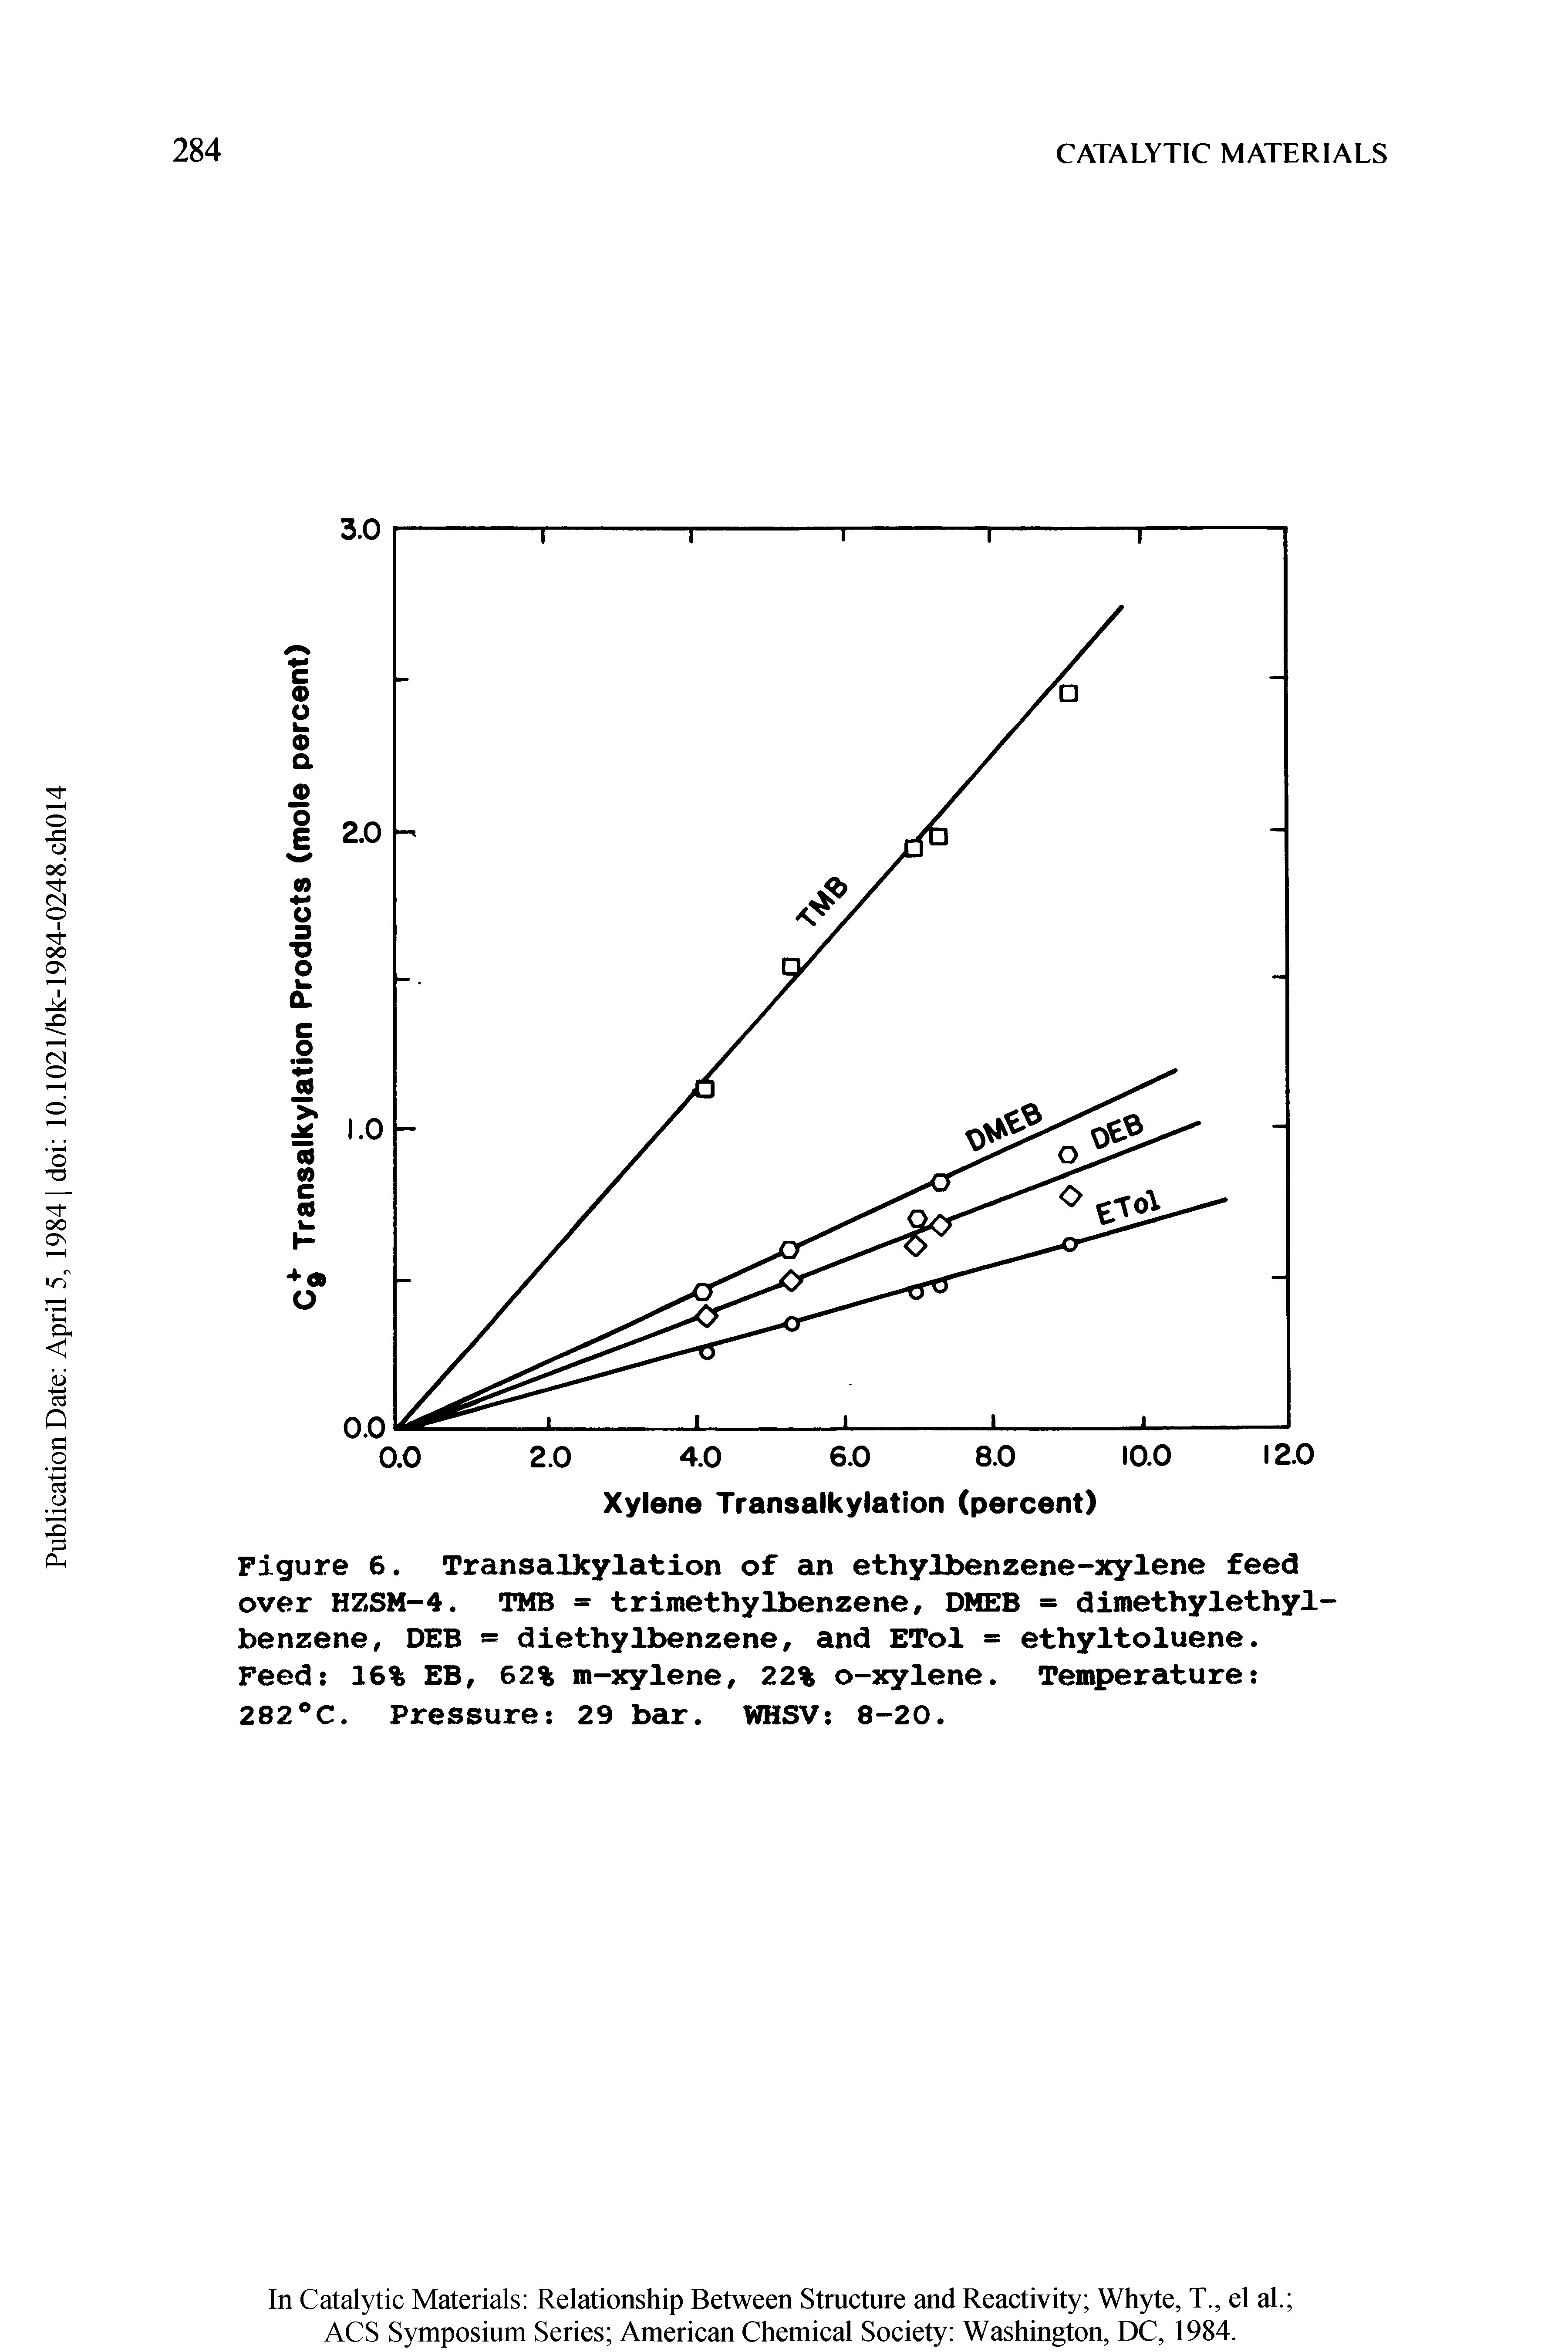 Figure 6. Transalkylation of an ethylbenzene-xylene feed over HZSM-4. TMB = trimethylbenzene, DMEB = dimethylethyl-benzene, DEB = diethylbenzene, and ETol = ethyltoluene. Feed 16% EB, 62% m-xylene, 22% o-xylene. Temperature ...